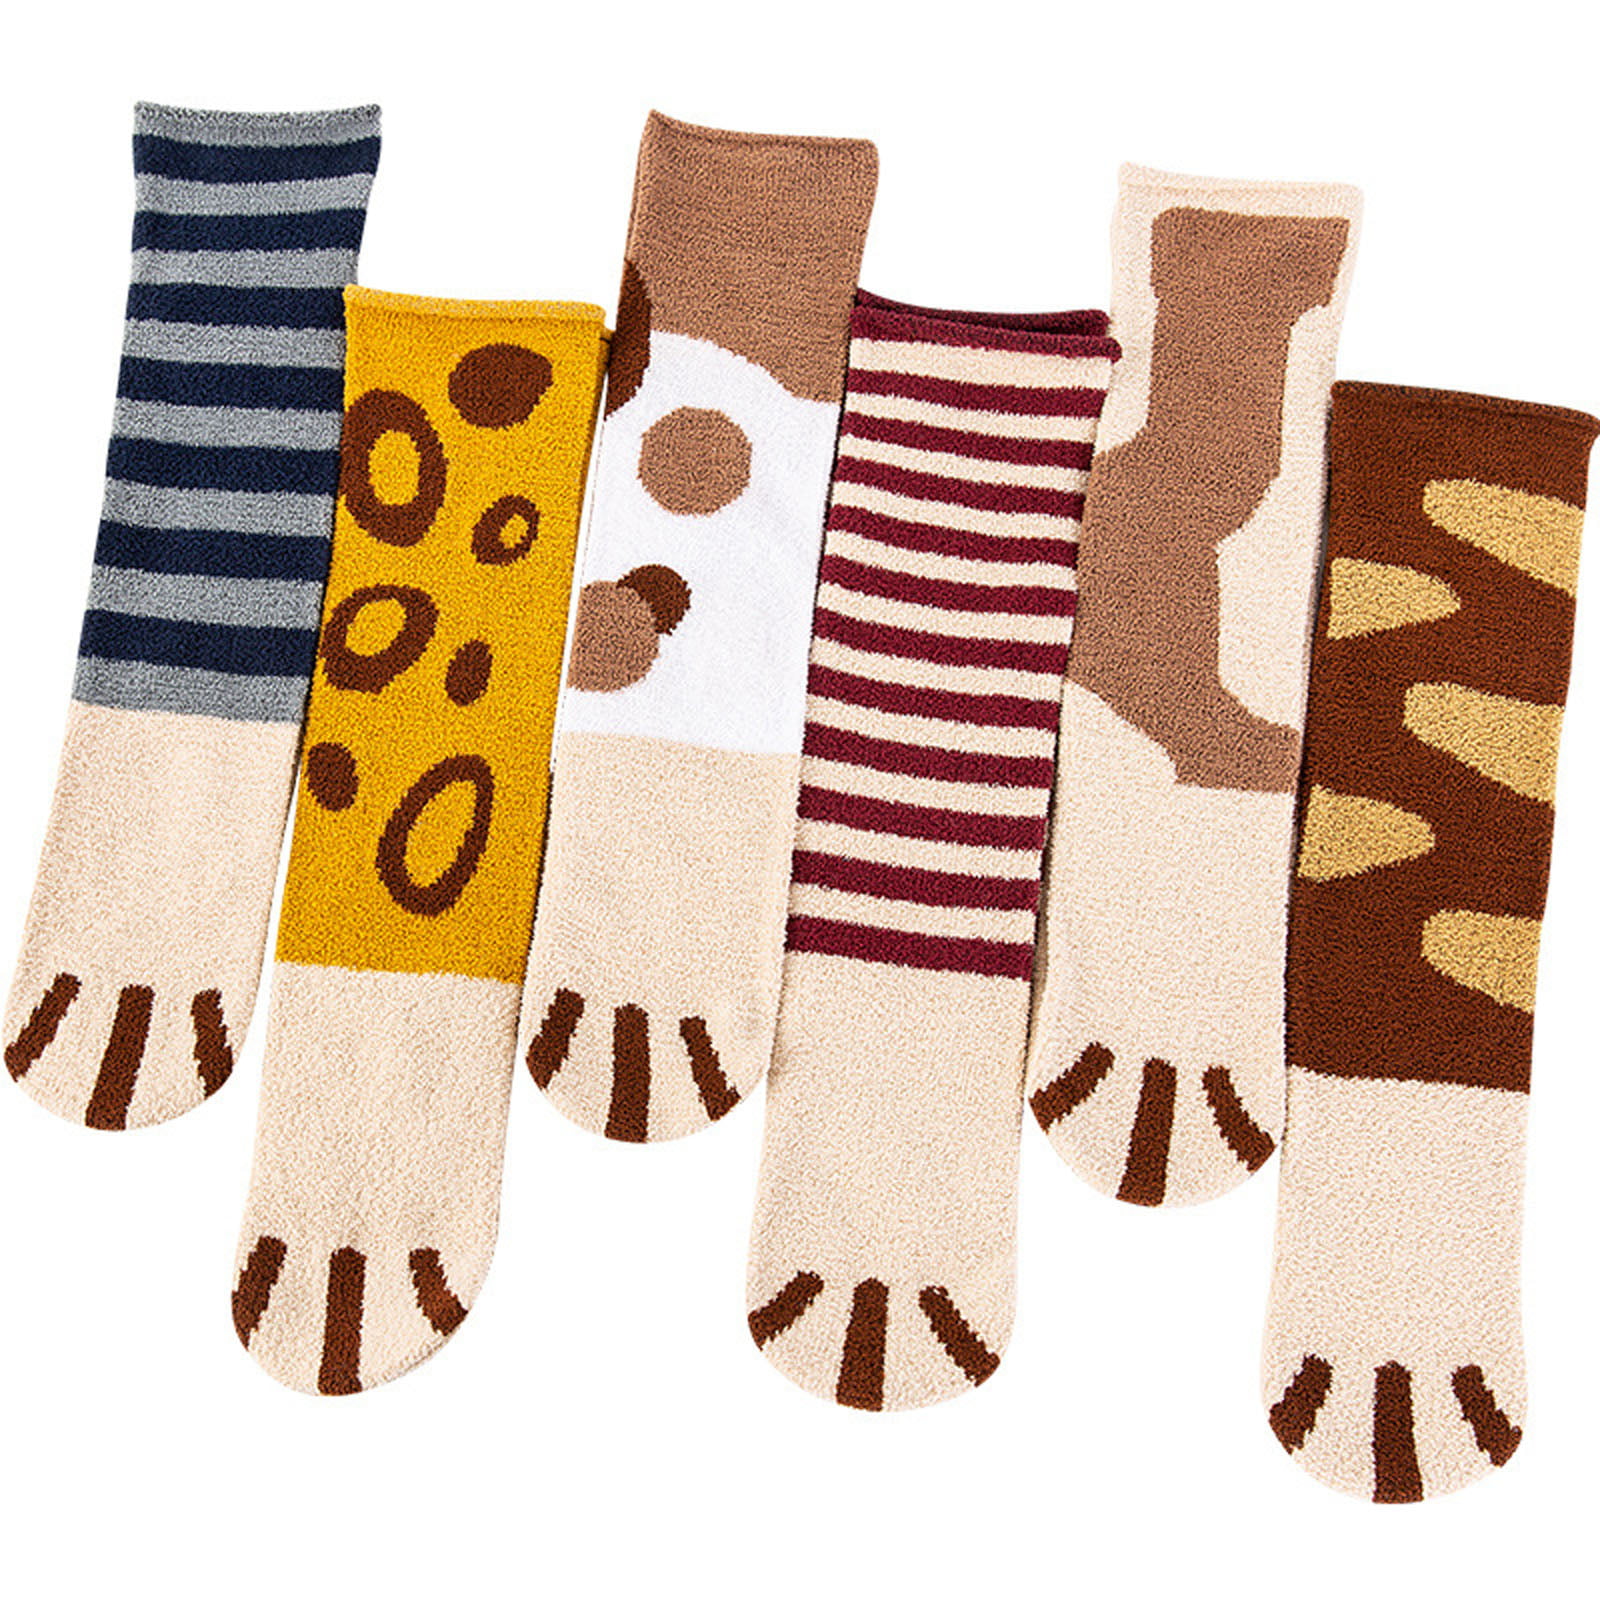 Vikenner Children Girls Long Tube Socks Cute Cartoon Cat Pattern Thermal Warm Cotton Over Knee High Stockings